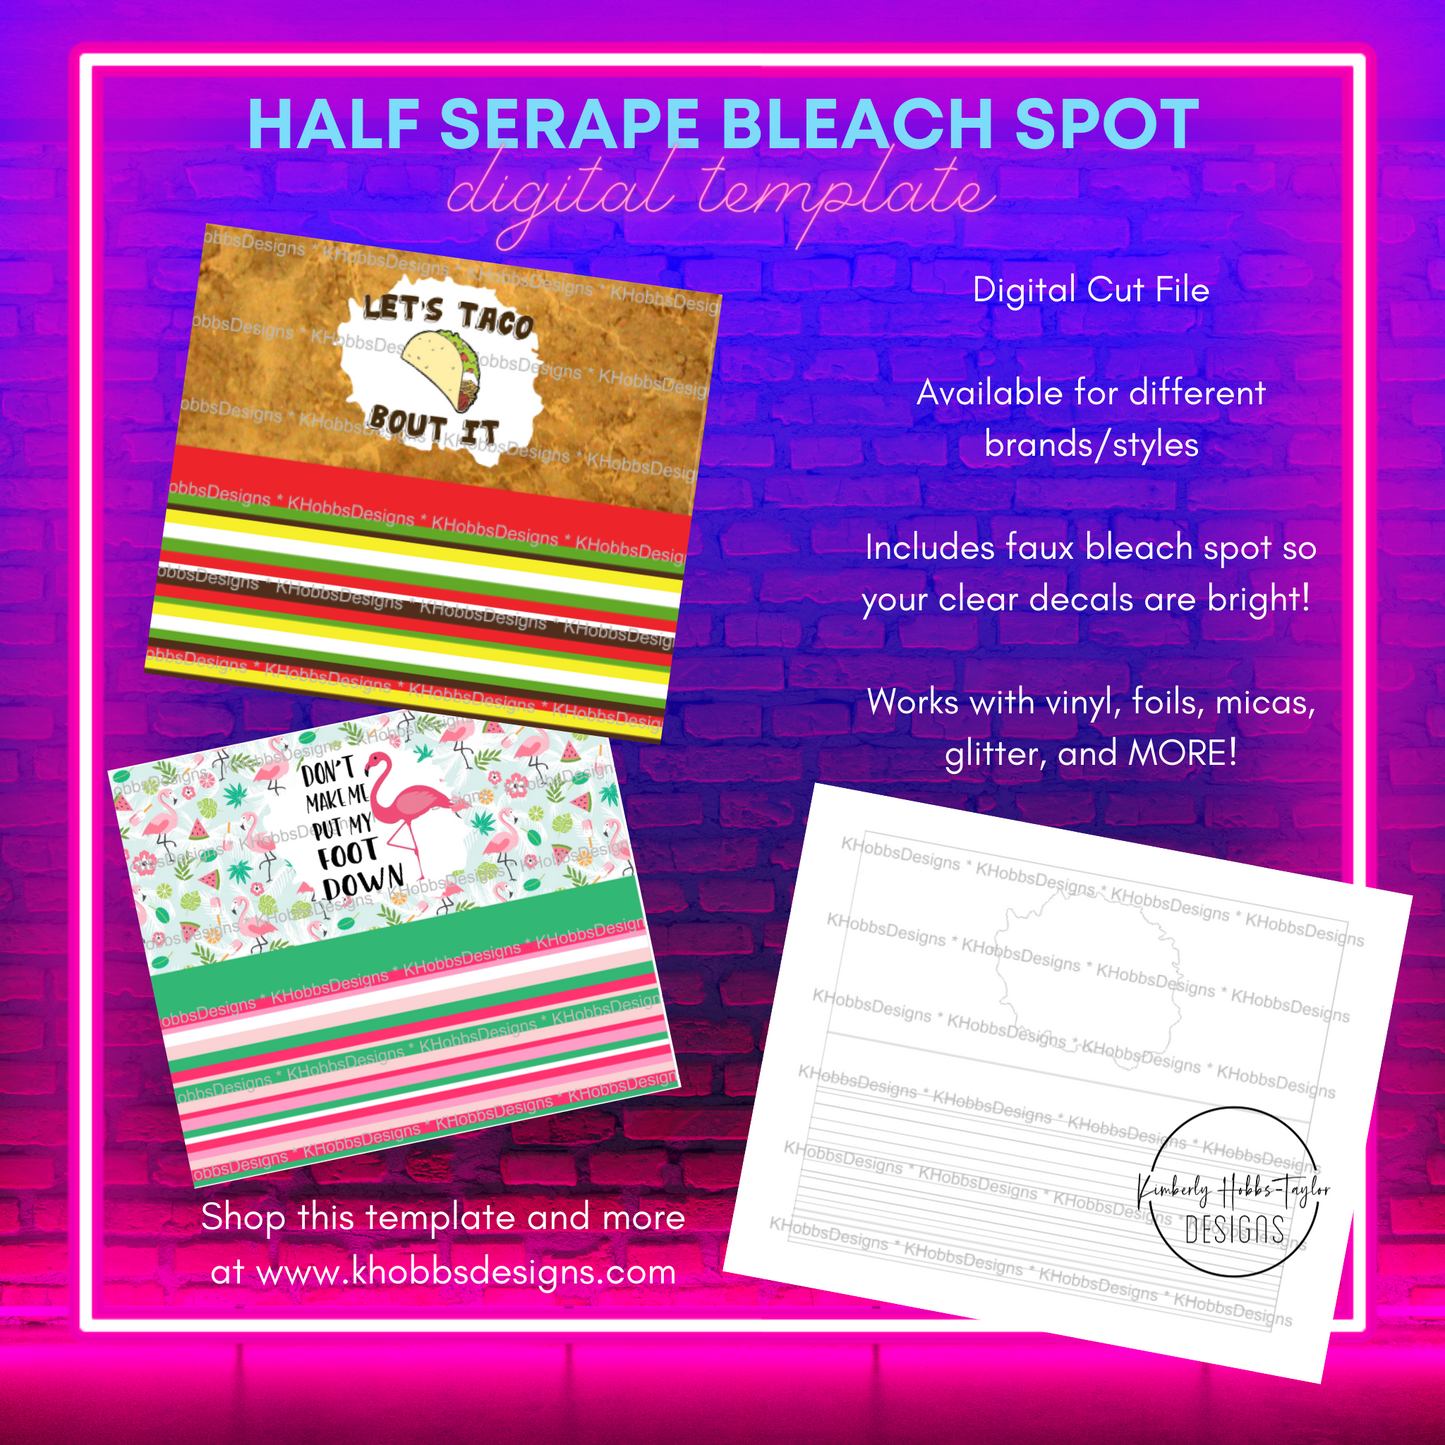 Half Serape Bleach Spot Template for TSM 24 Plump - Digital Cut File Only